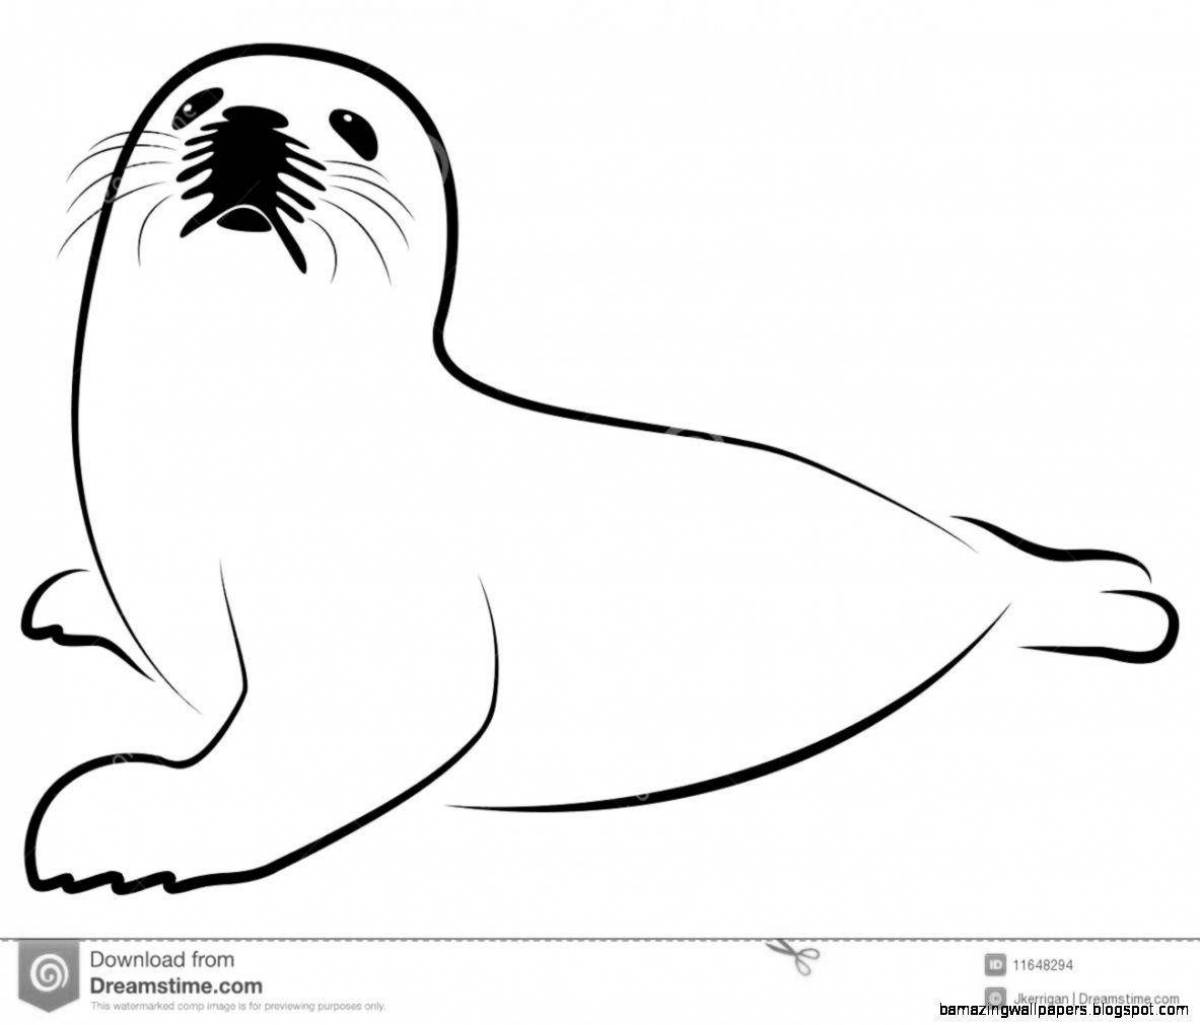 Striking harbor seal coloring page